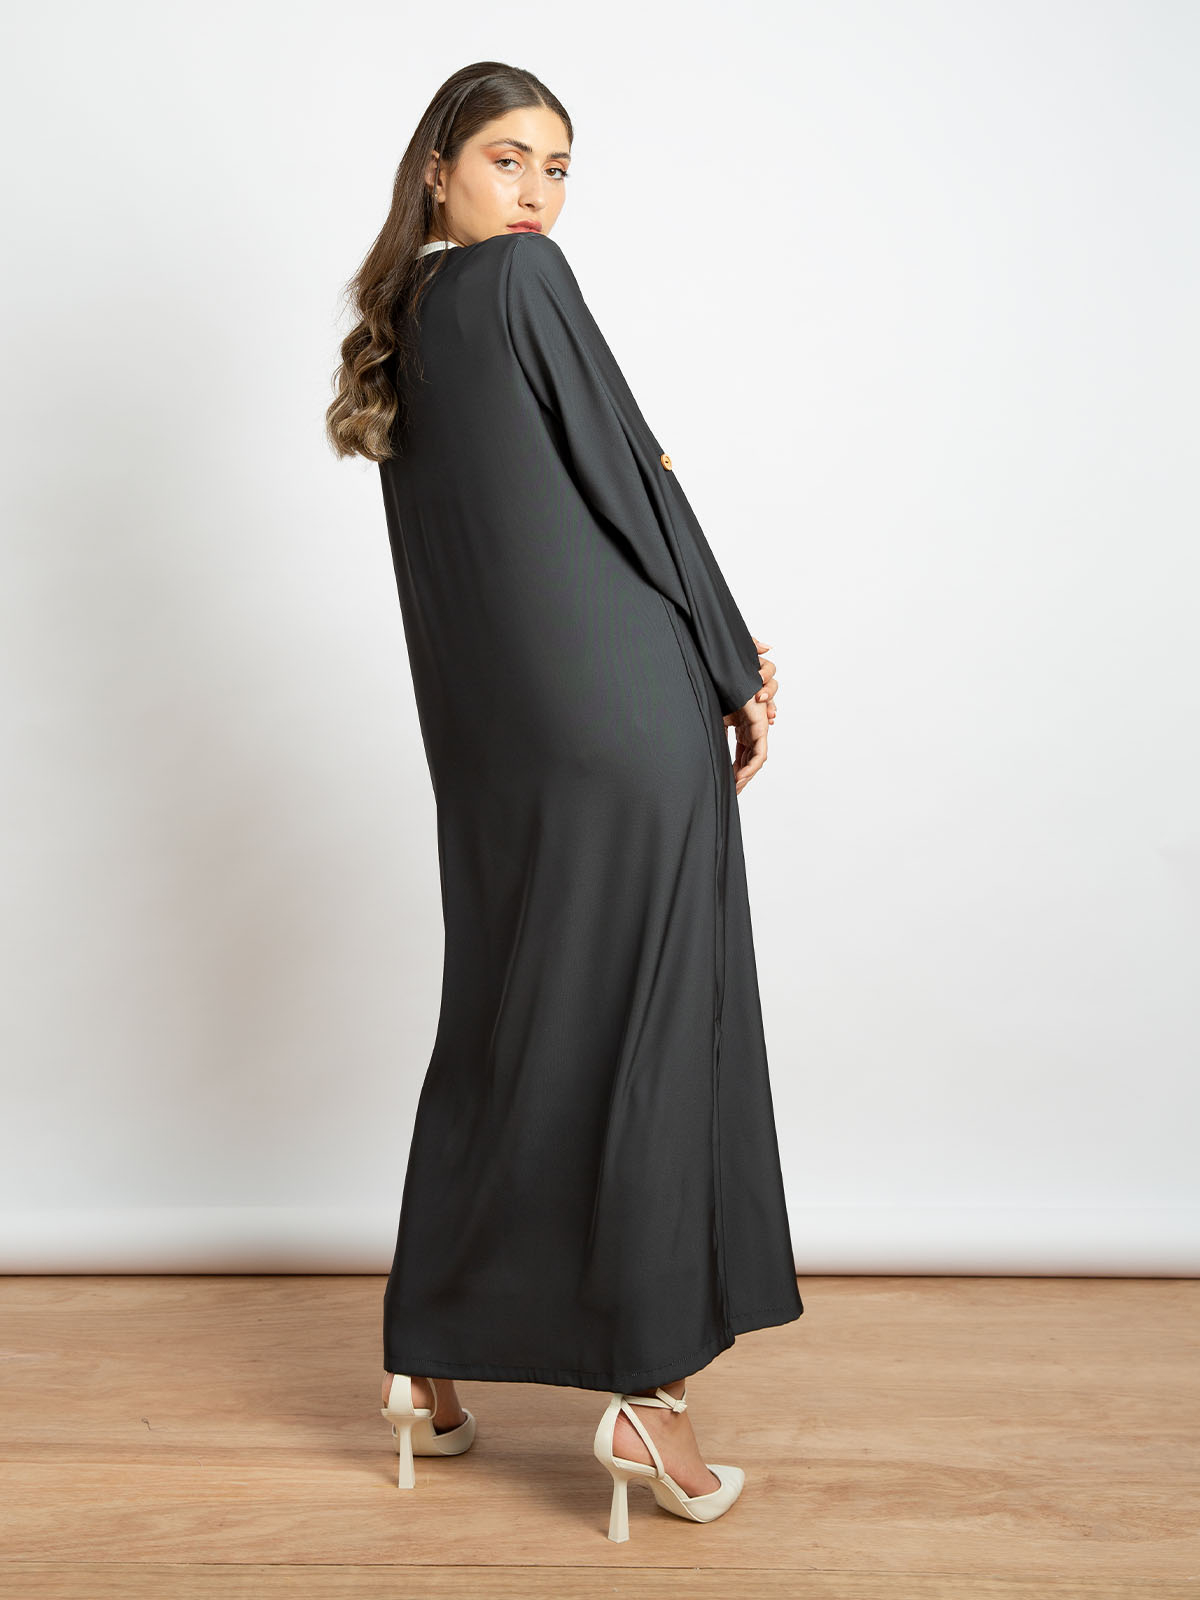 Black practical abaya | comfortable casual abayas